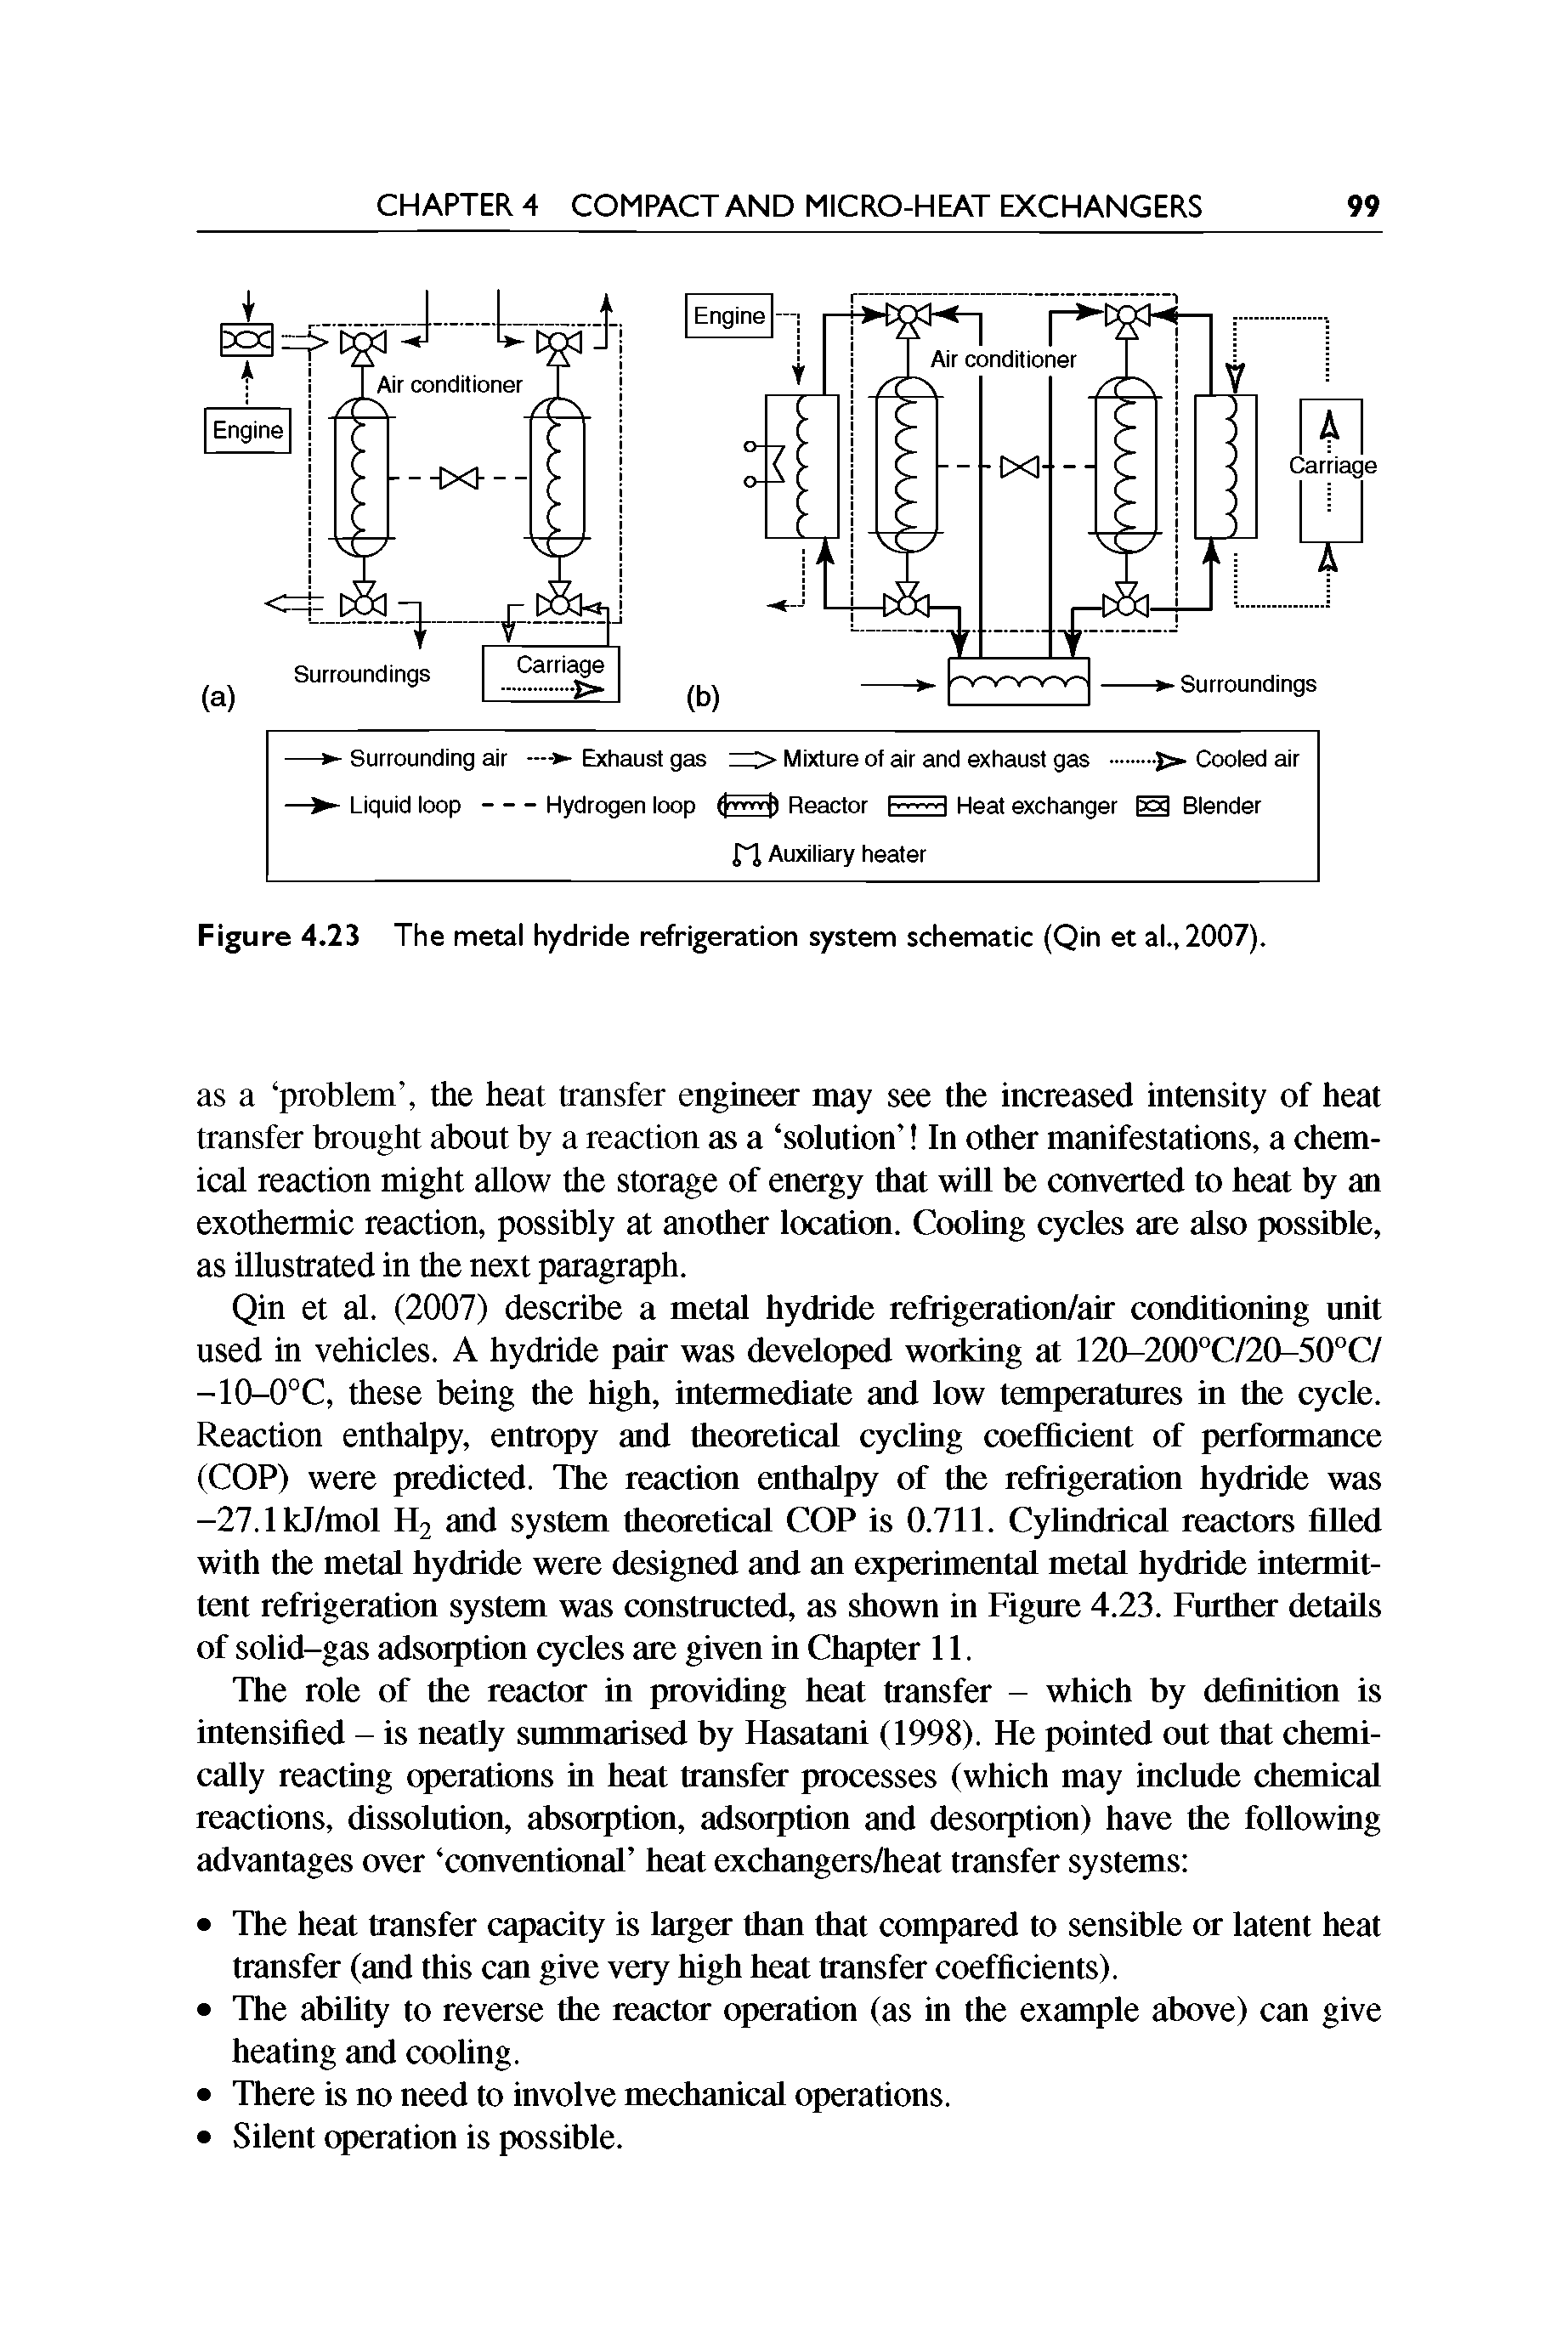 Figure 4.23 The metal hydride refrigeration system schematic (Qin et al.,2007).